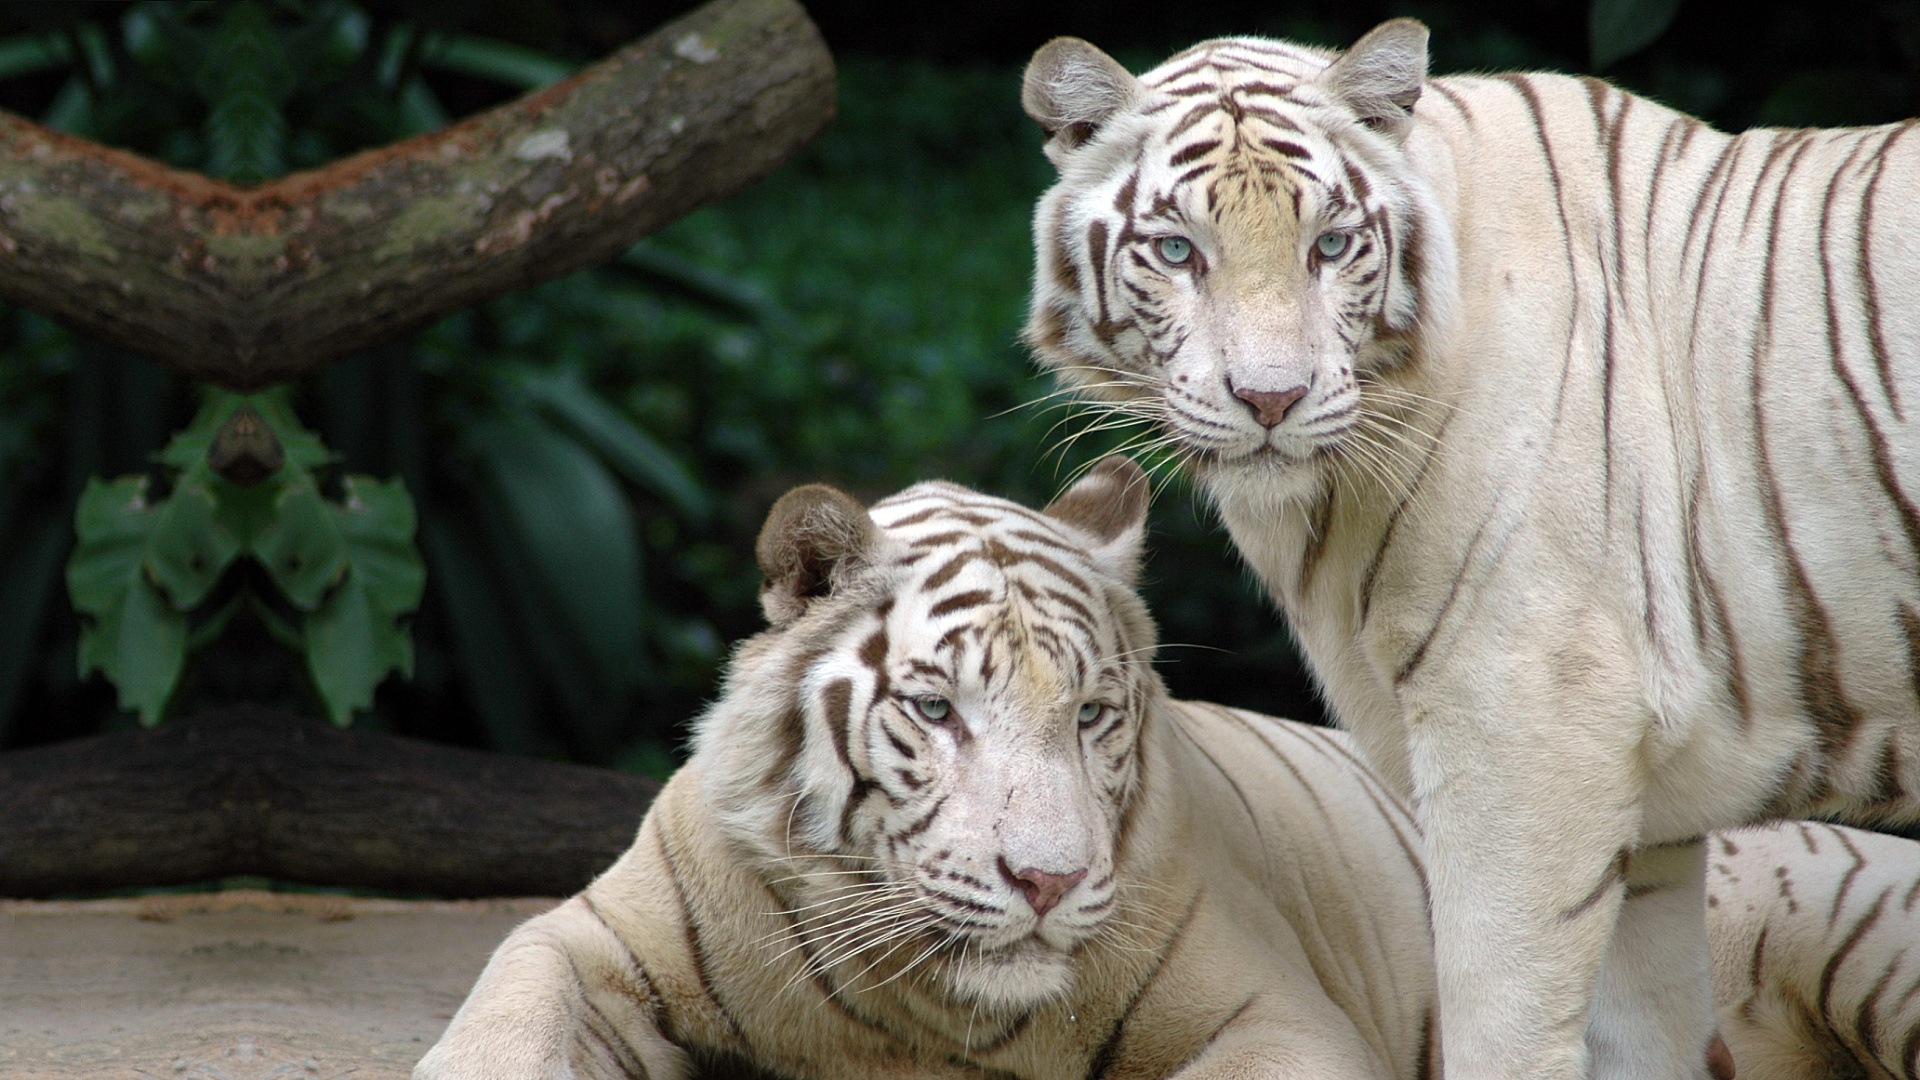 White Tiger inspiration photos